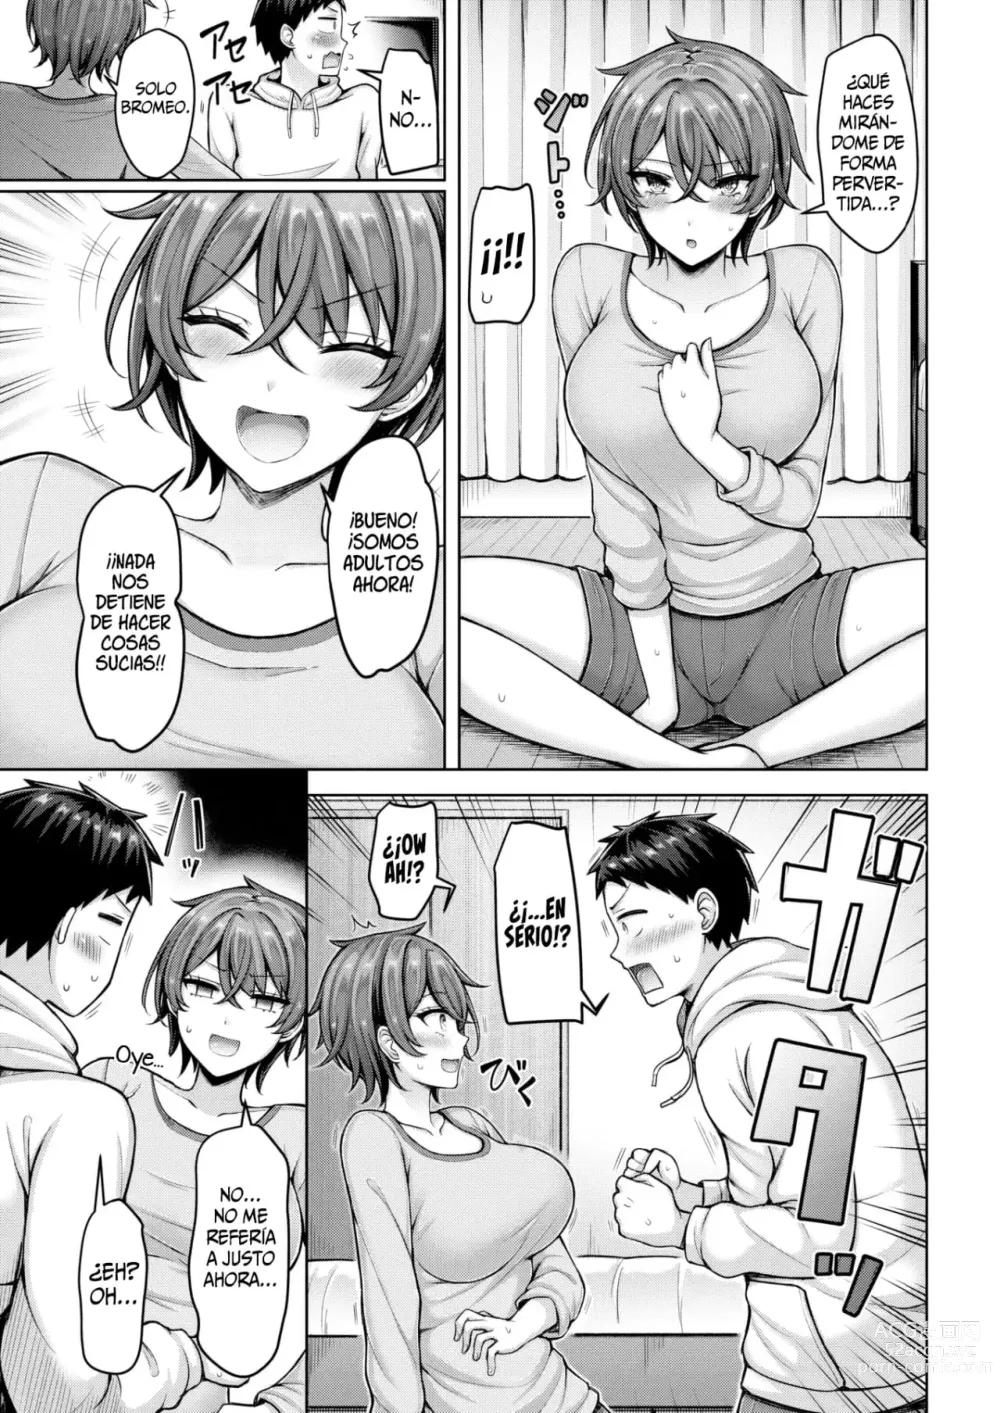 Page 5 of manga Debut Adulto